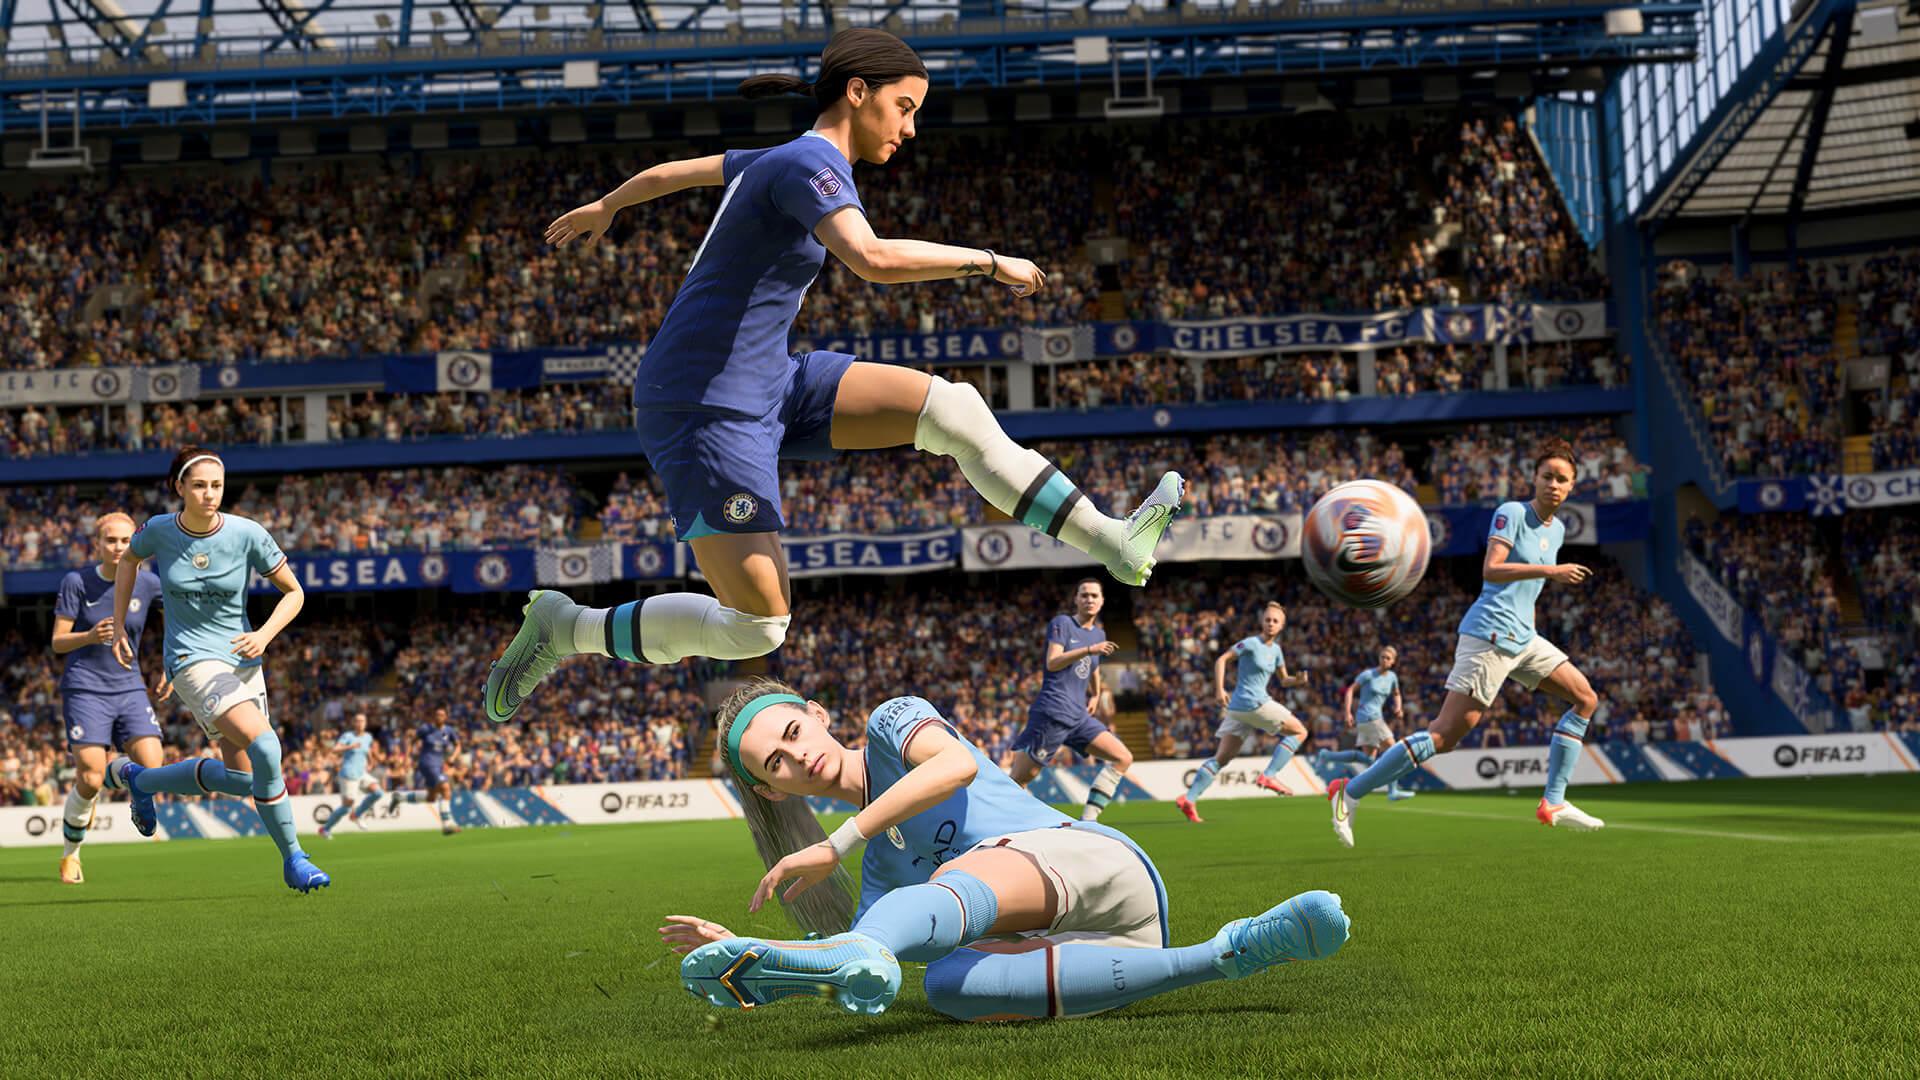 Is FIFA 23 Cross-Platform?